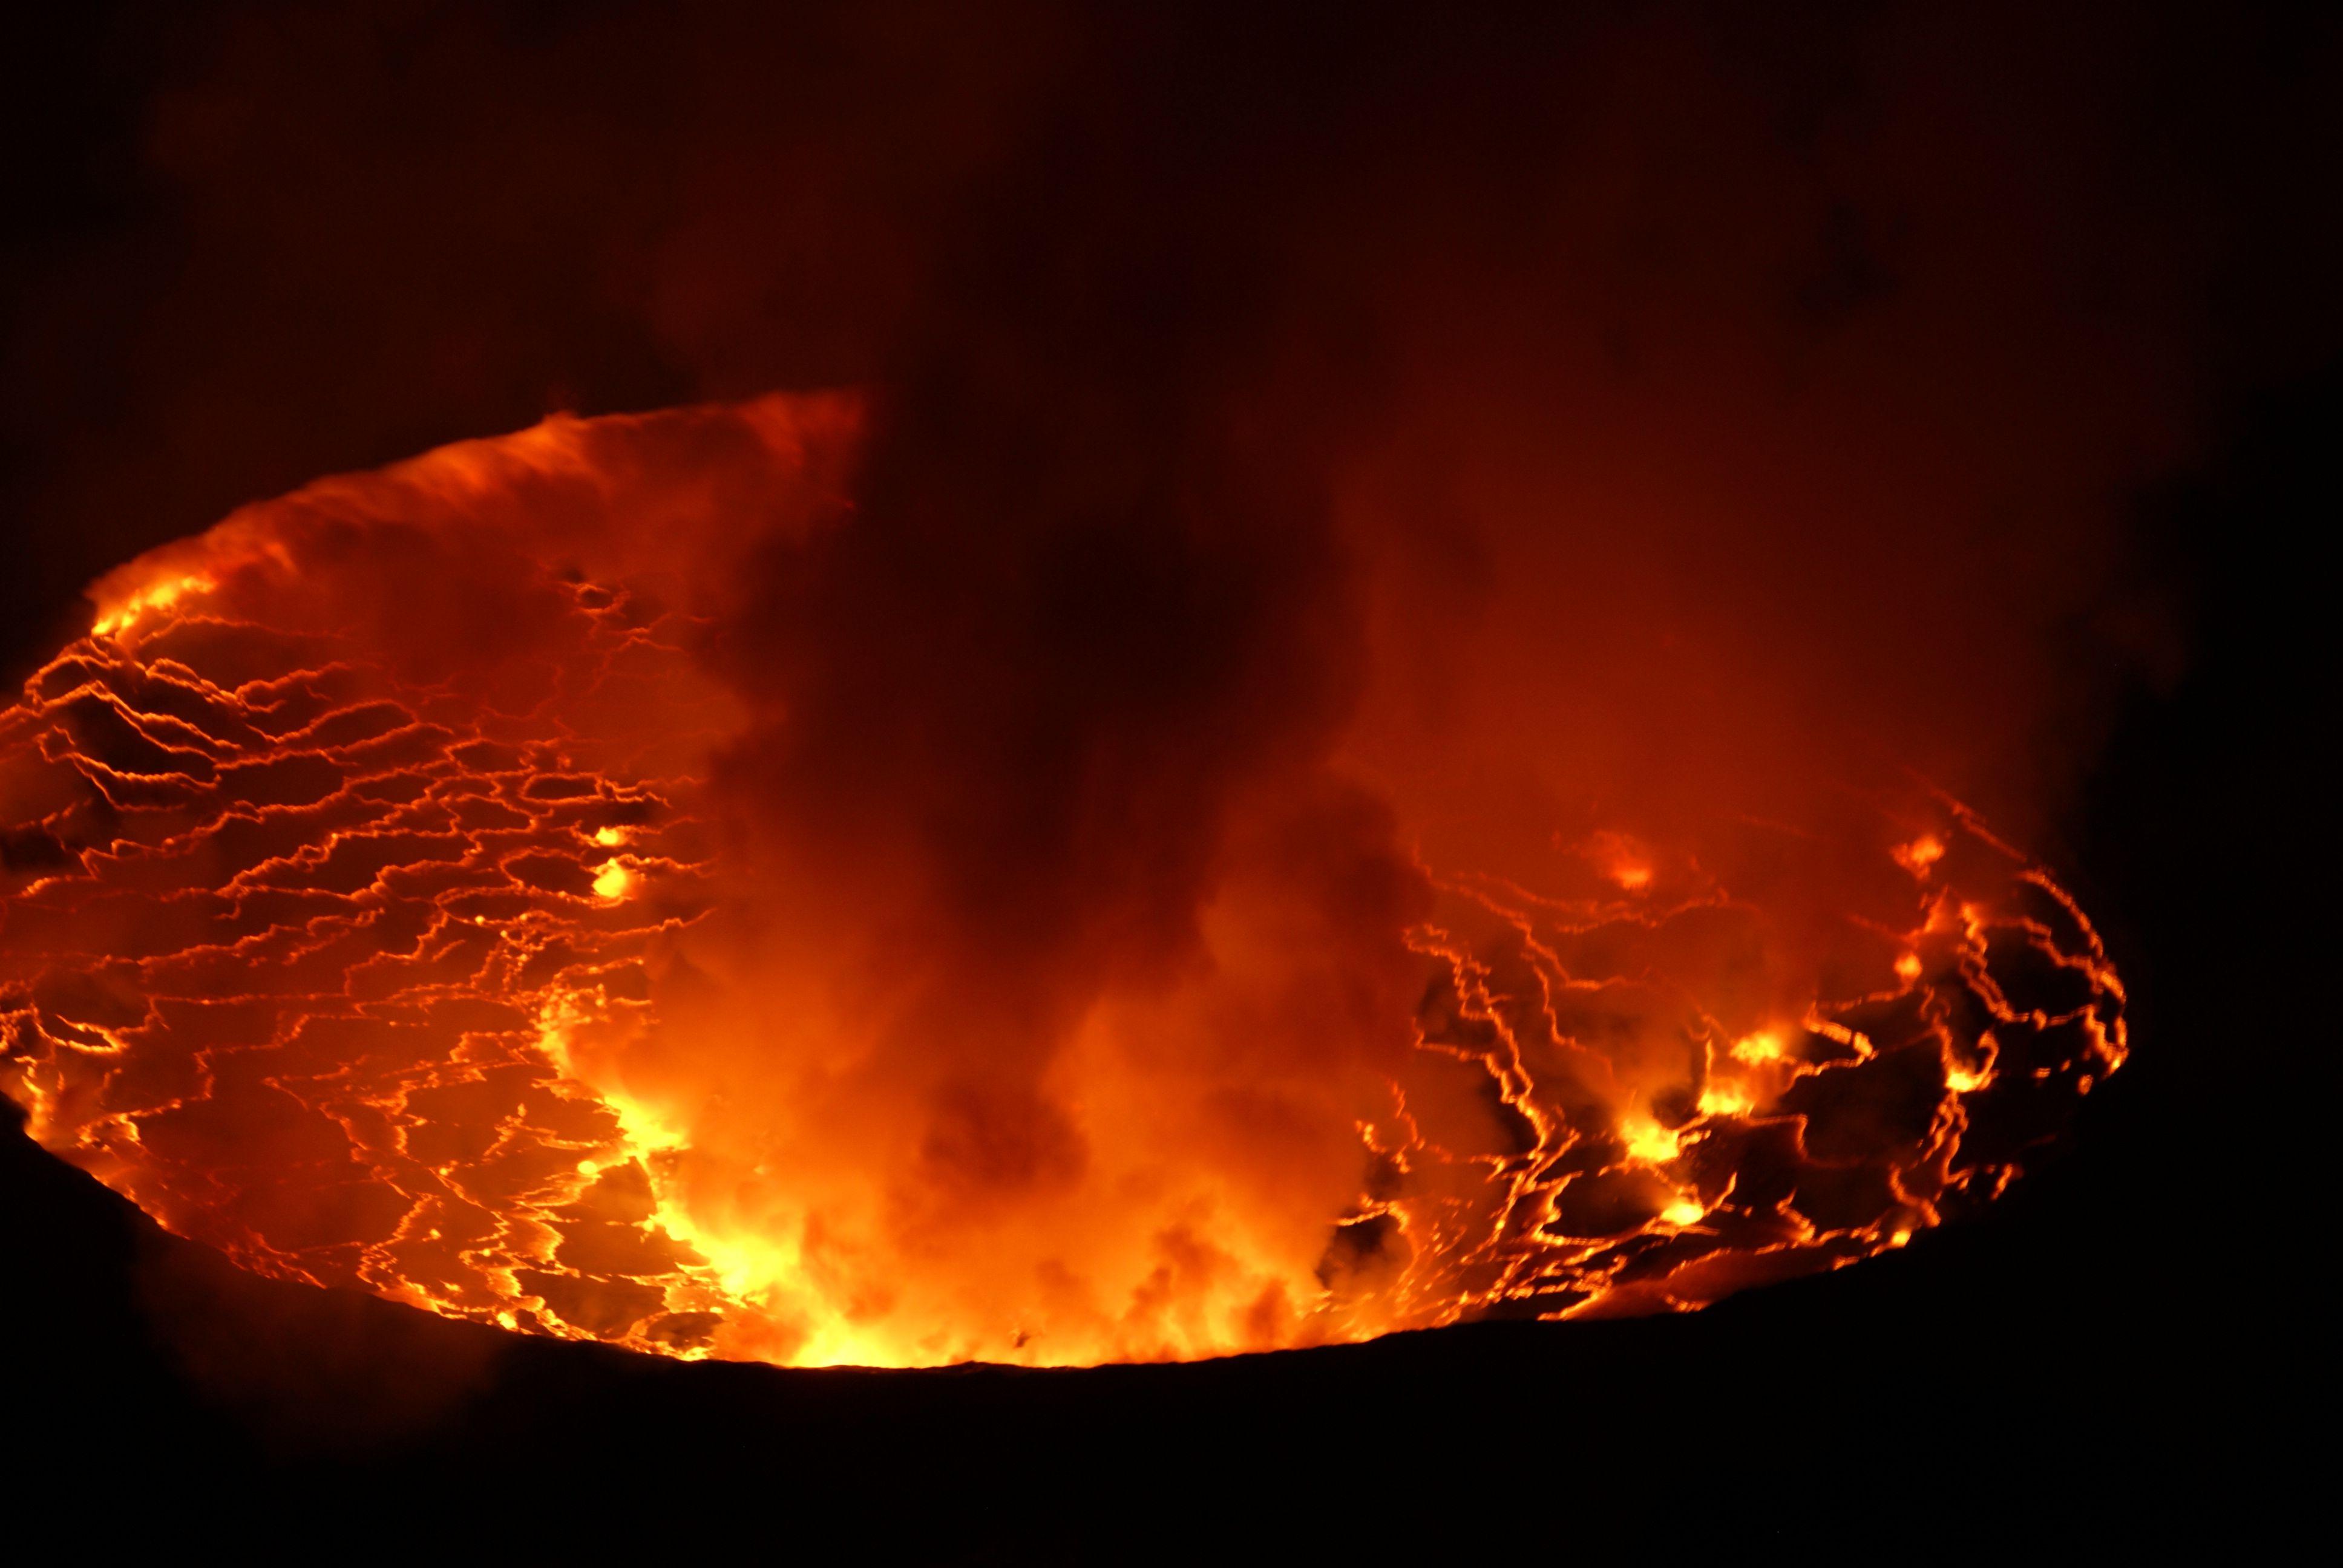 Mt. Nyiragongo Volcano Trek, Congoor: 'The Mountain was on fire